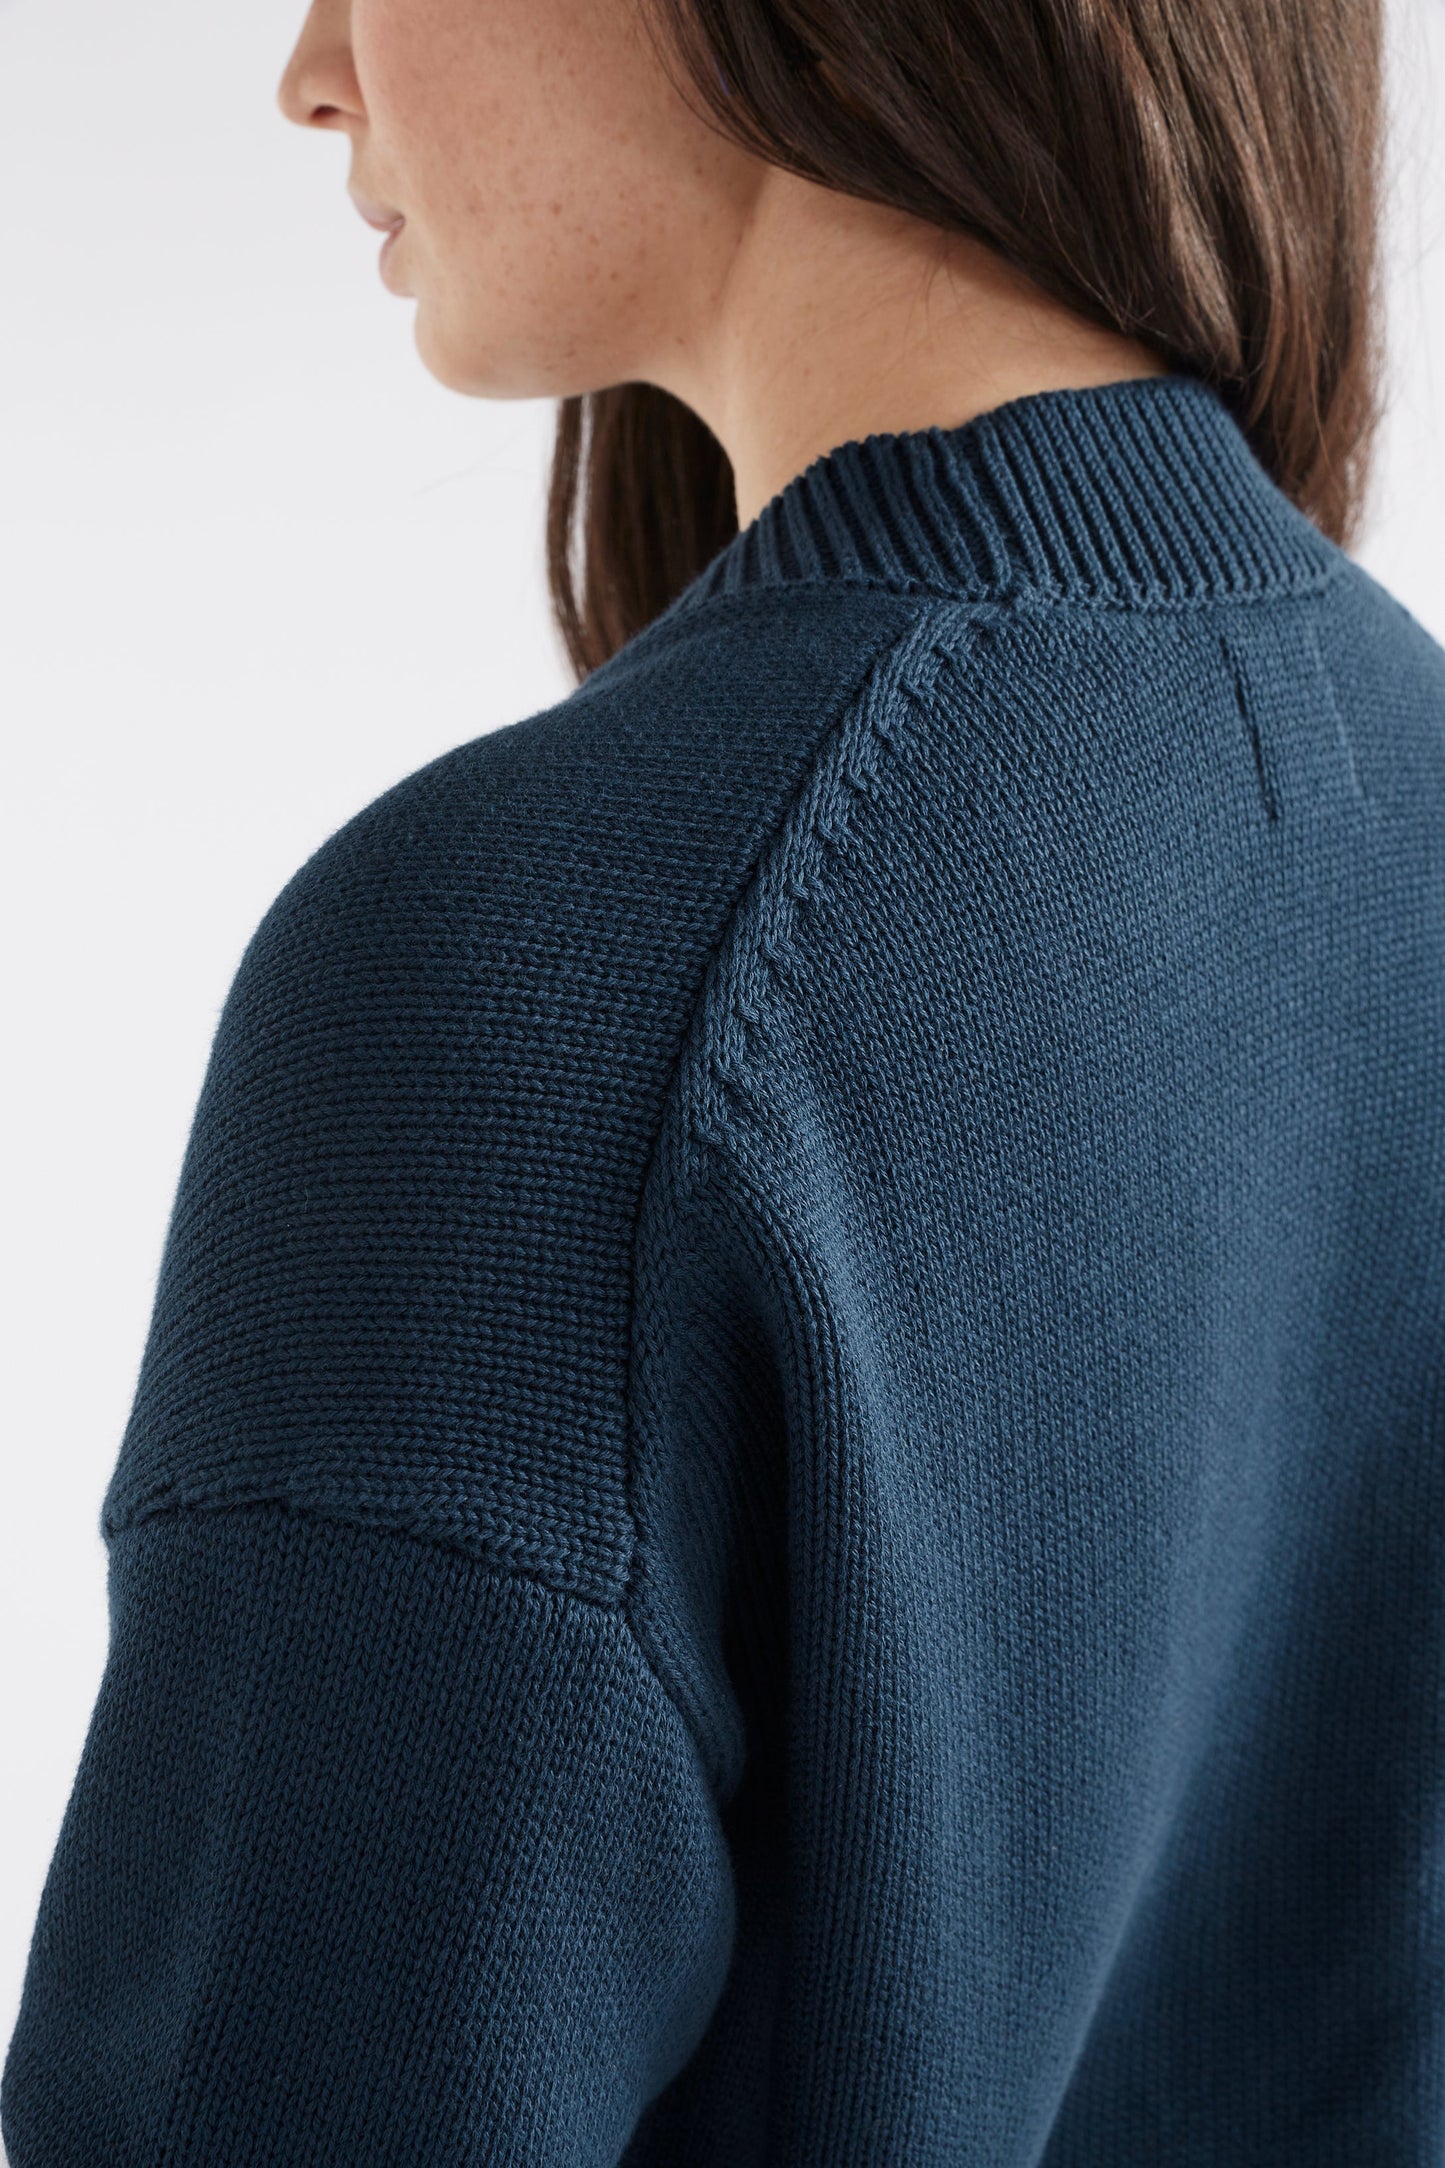 Willow Organic Cotton Everyday Knit Cardigan Model back detail | DEEP SEA BLUE